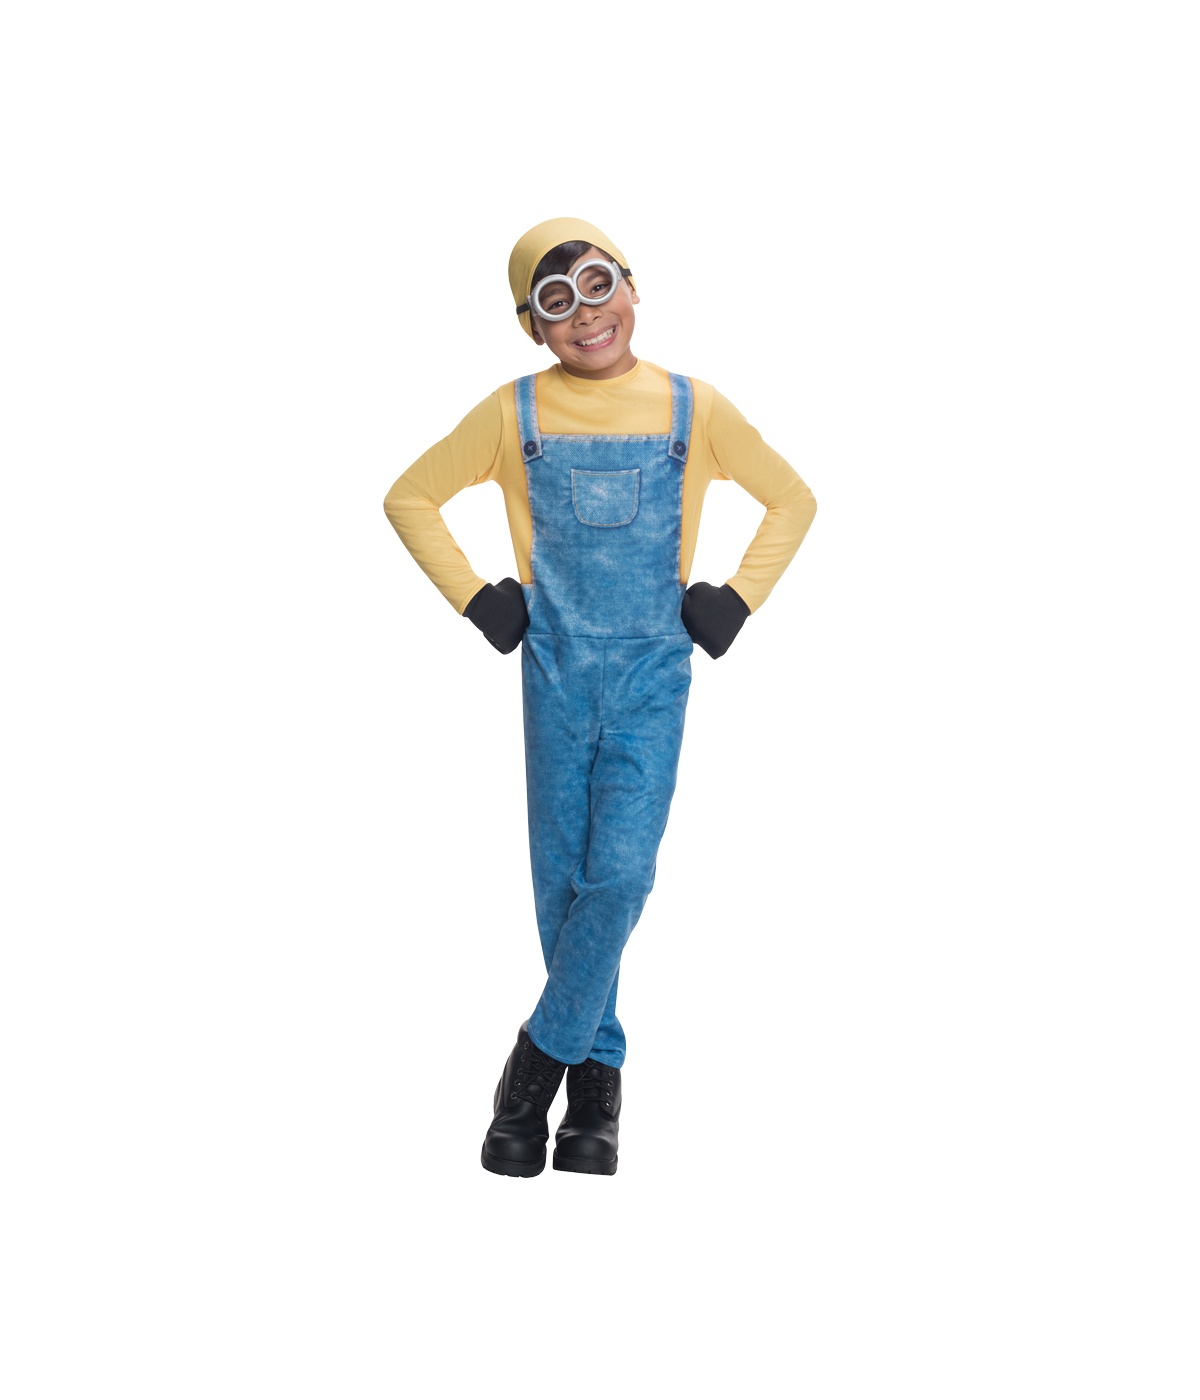  Boys Minion Bob Costume